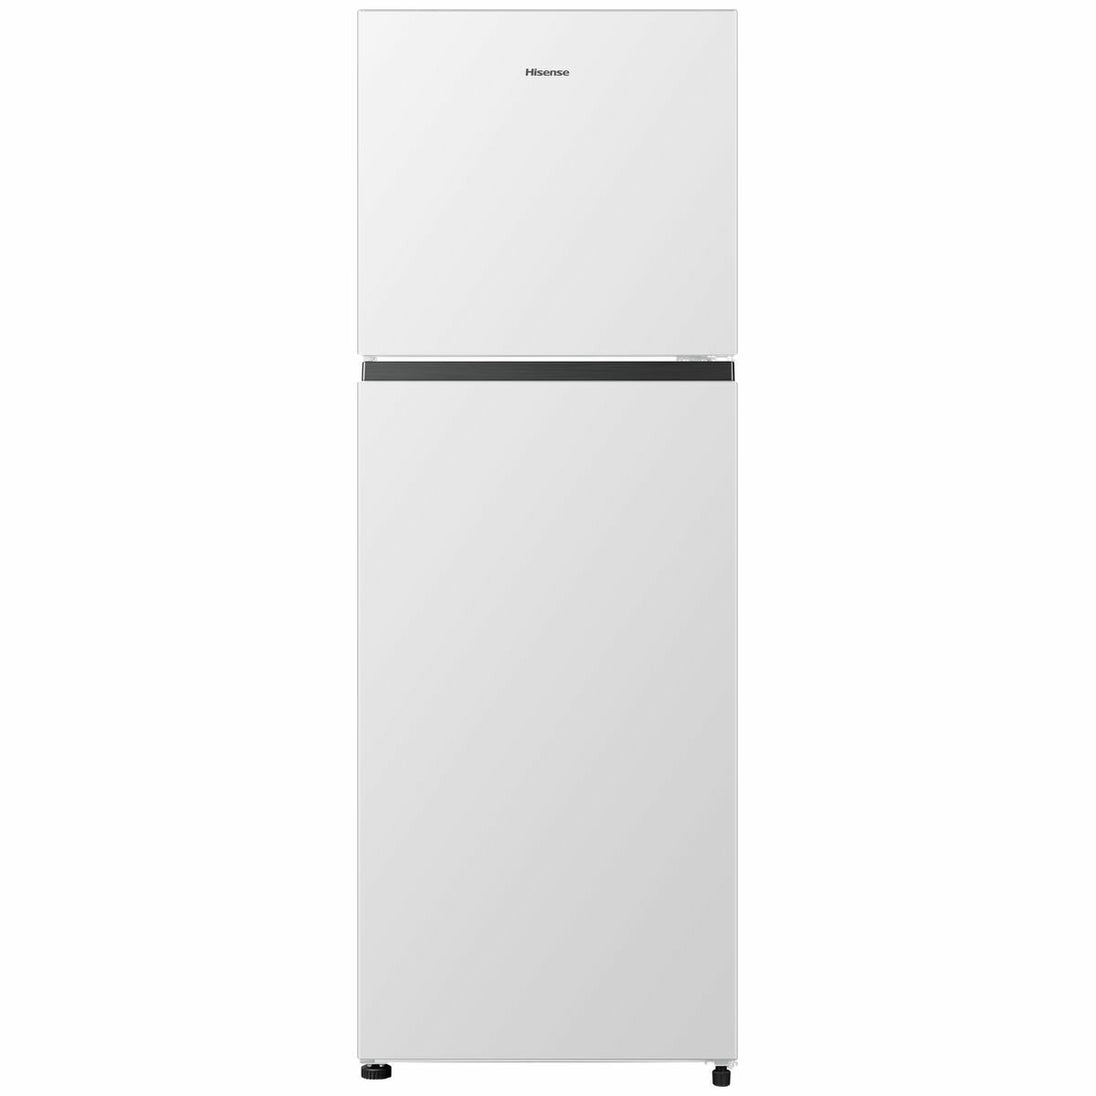 hisense-326l-top-mount-refrigerator-hrtf326-1-197528a4-high